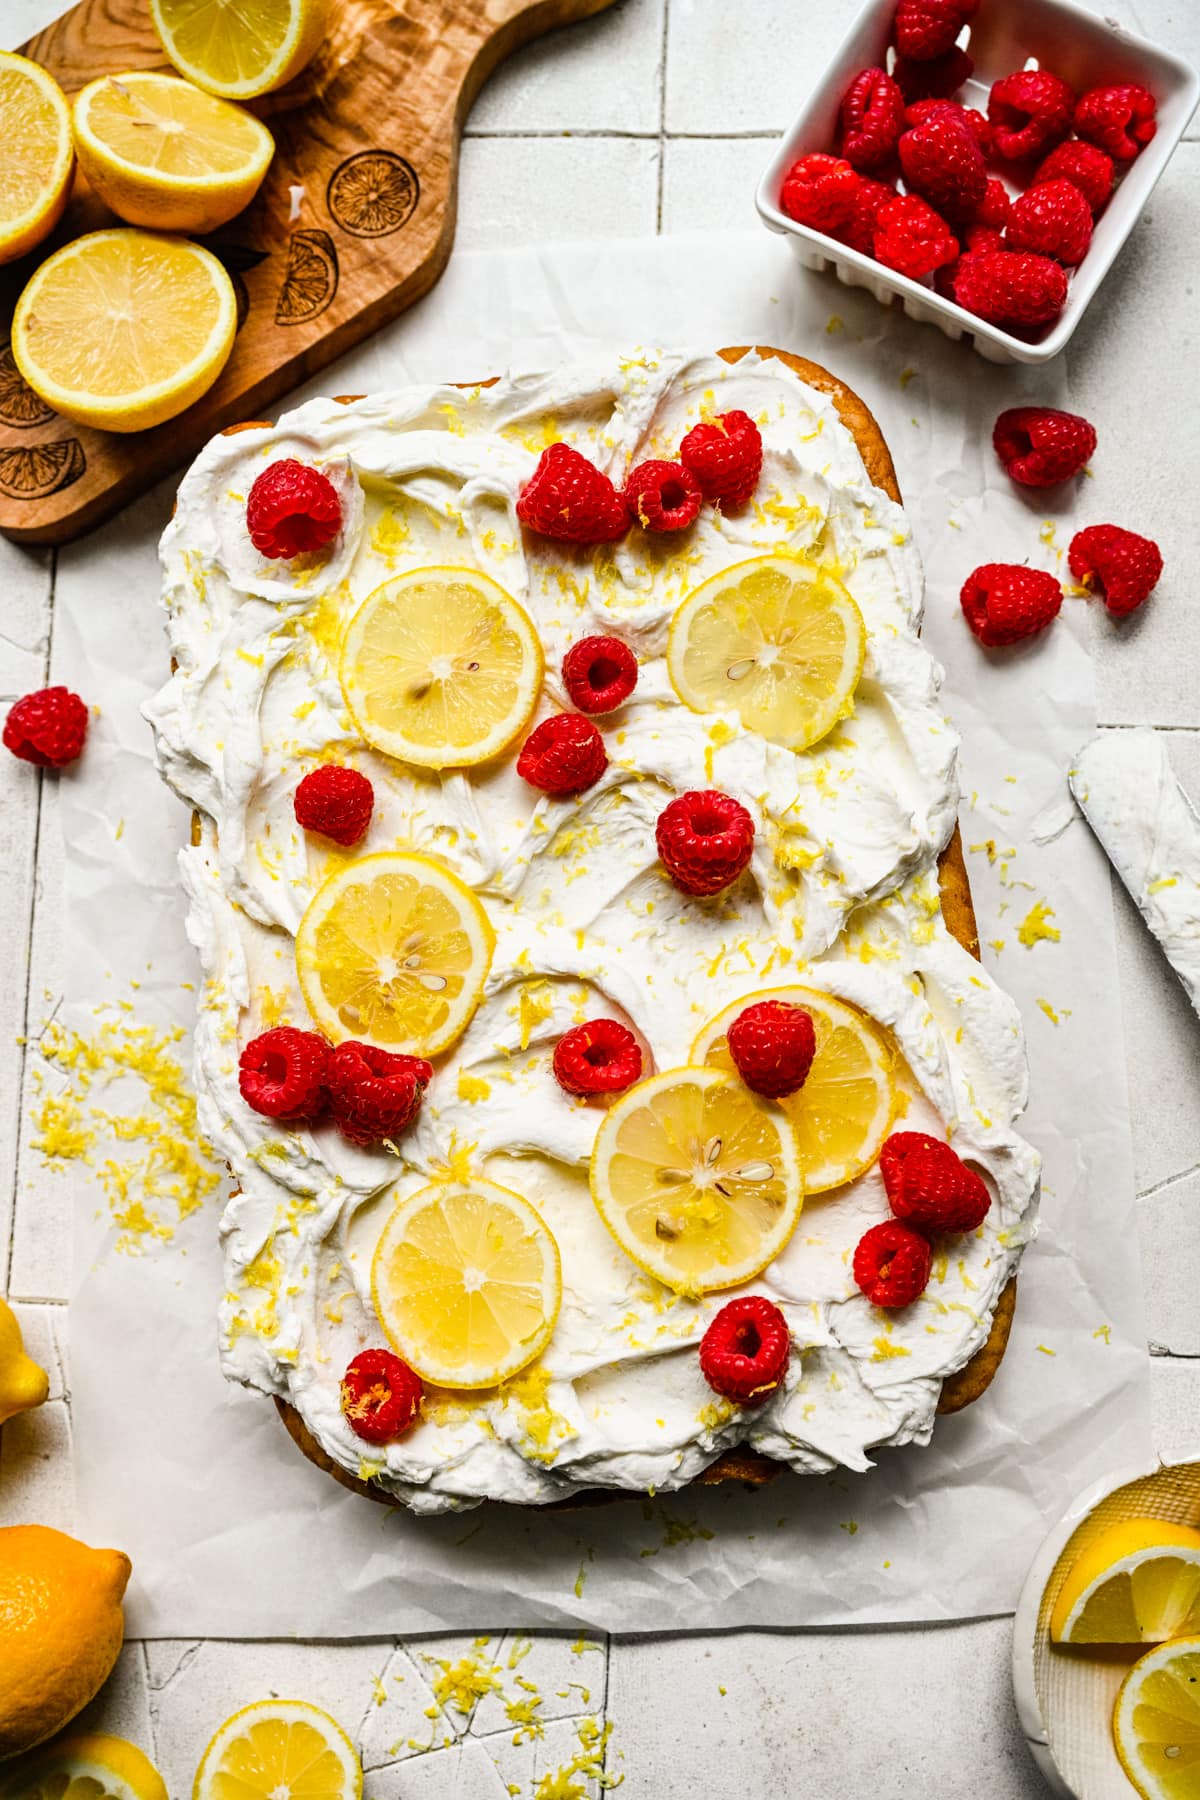 Finished vegan lemon cake topped with lemon slices and raspberries.